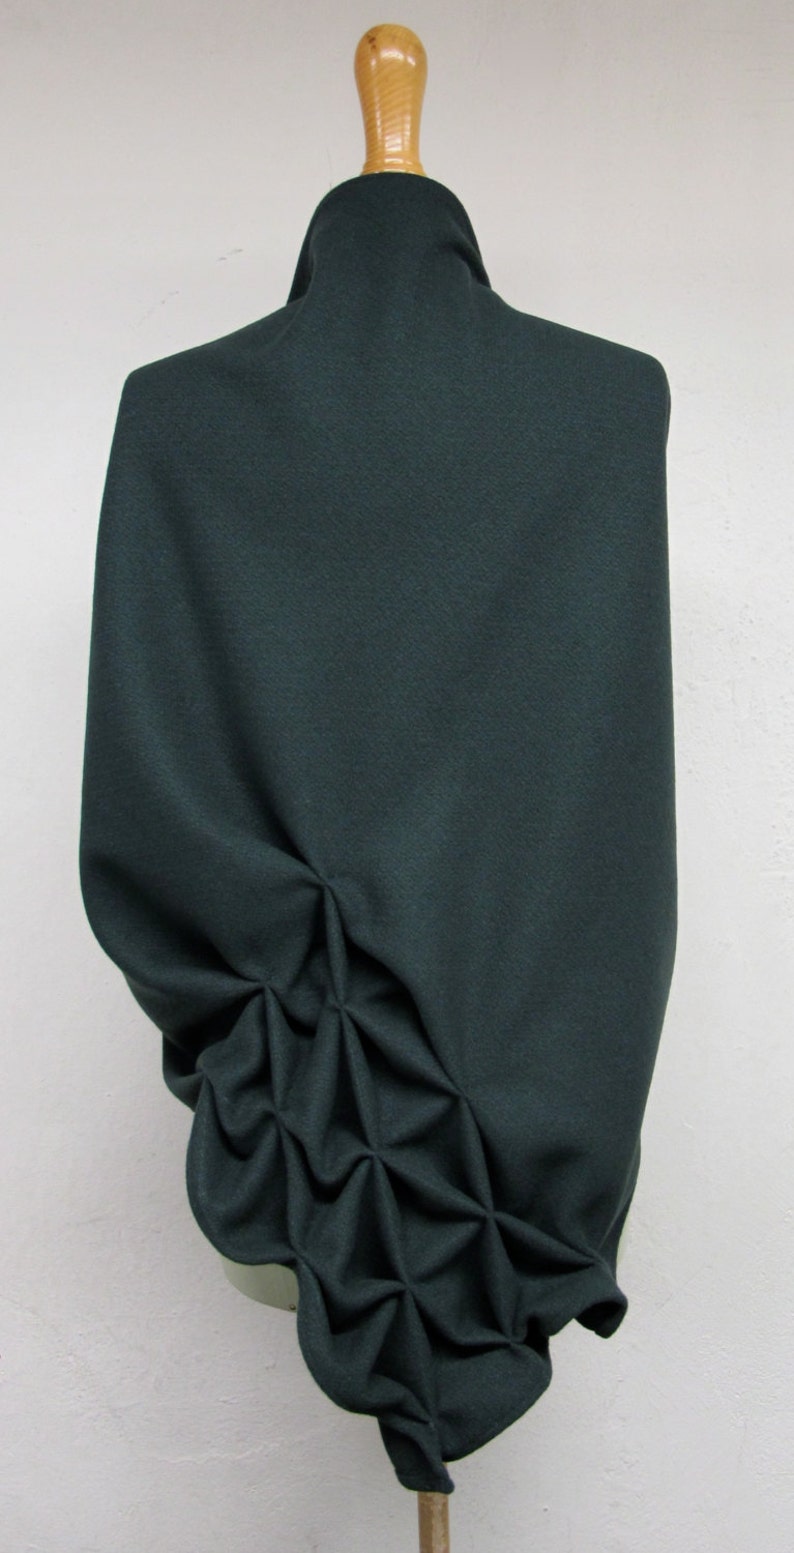 geometrischer wollschal in smaragd, 100% wolle, dreieckstuch länge 220cm, dunkelgrün Bild 3